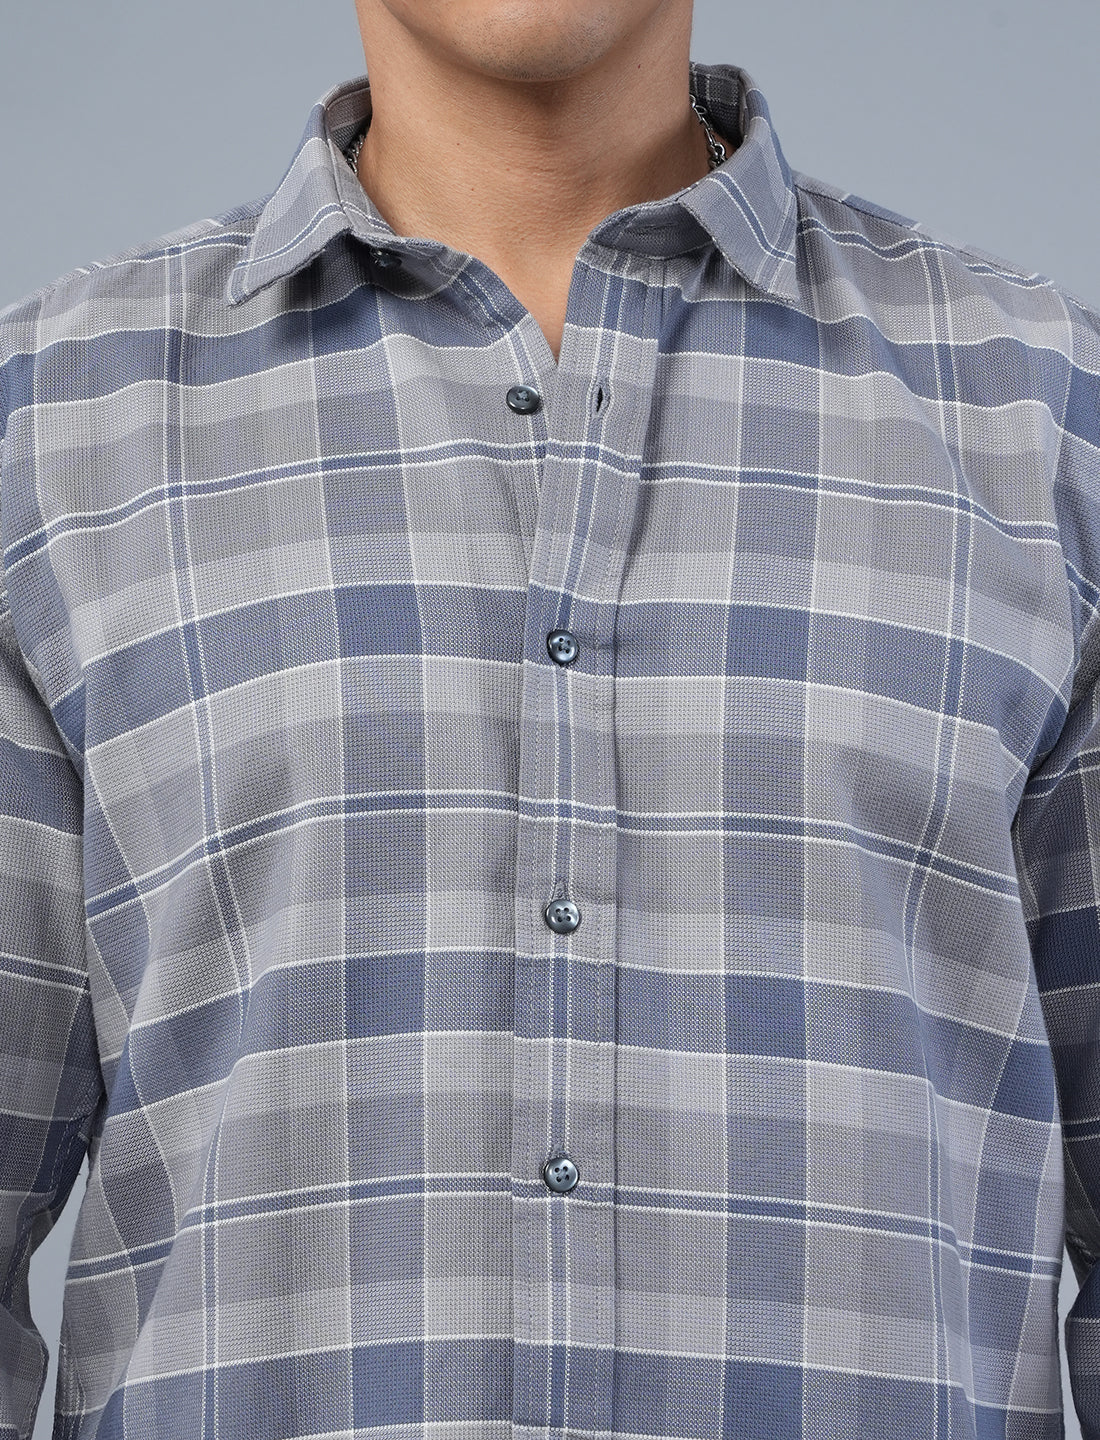 Buy Blue Woven Cotton Checked Shirt For Men